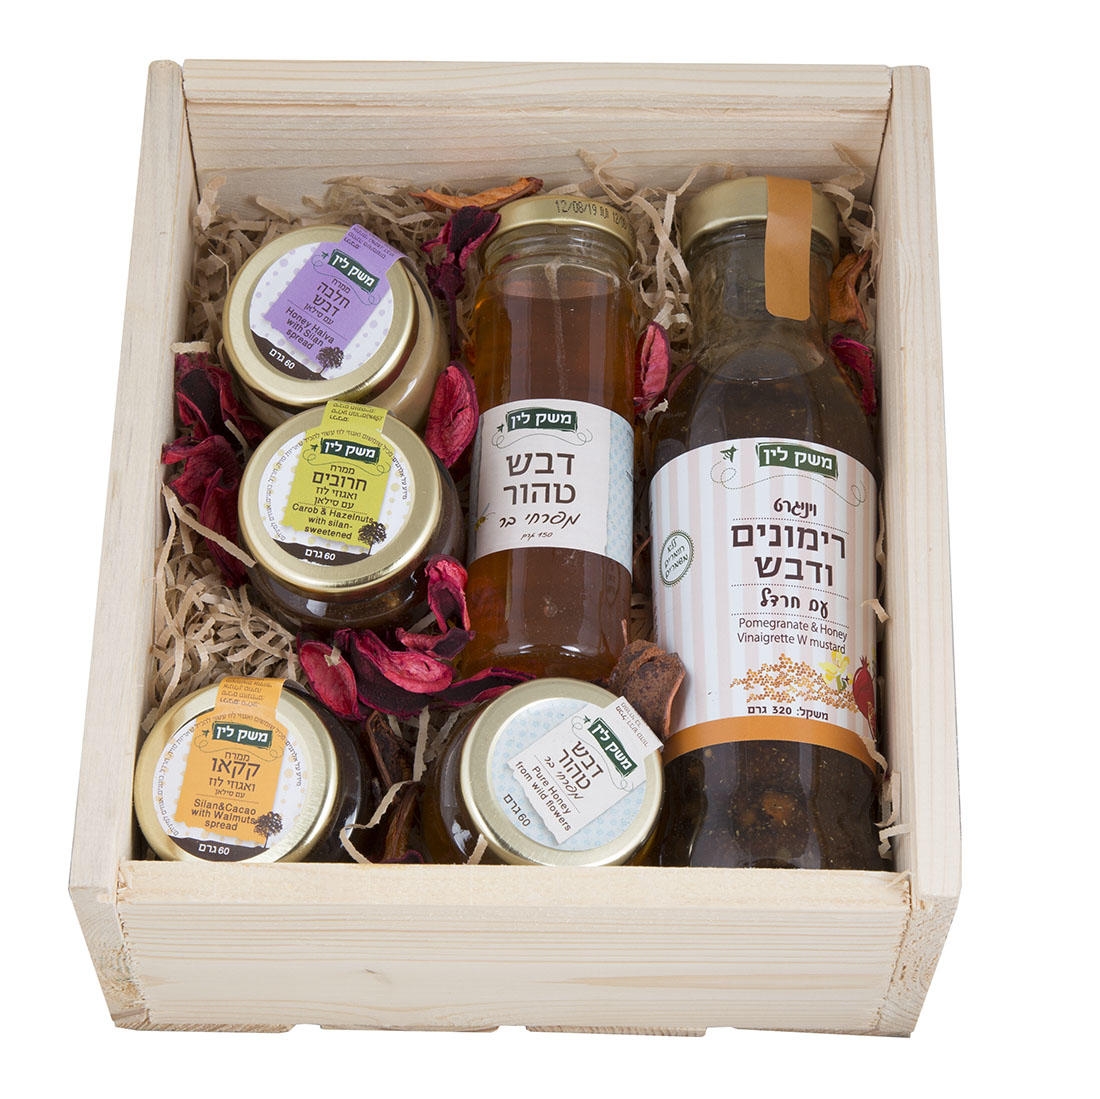 Lin's Farm All-Natural Honey, Spreads & Marinade Gift Box - Set of 6 - 1